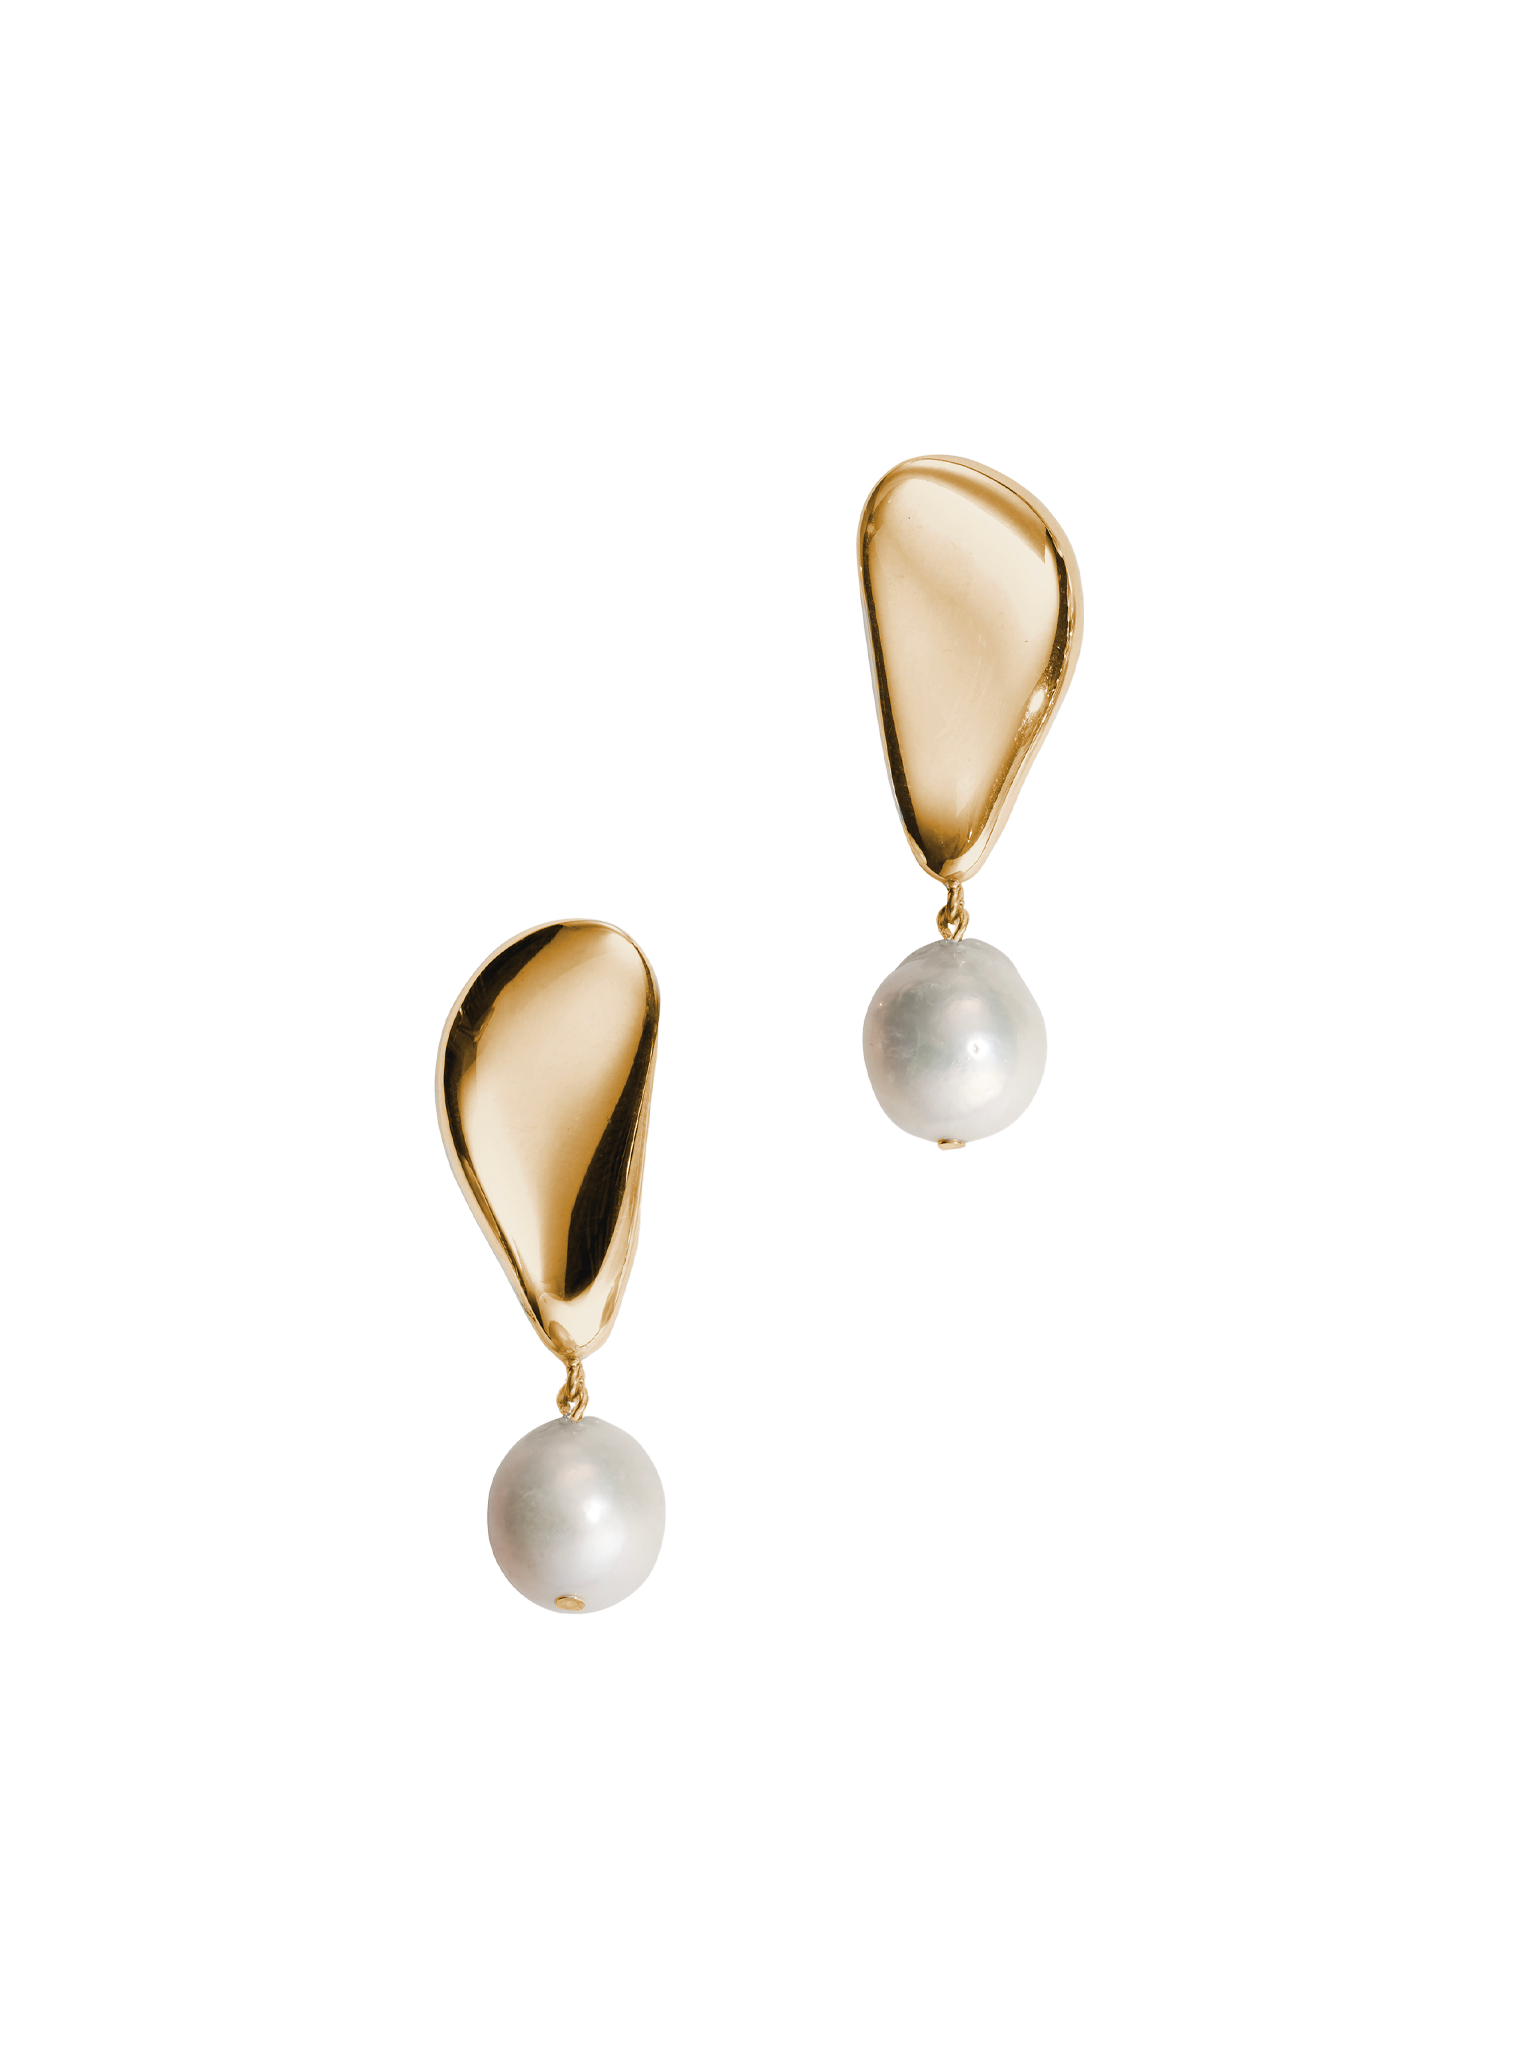 Sherri earrings - gold vermeil